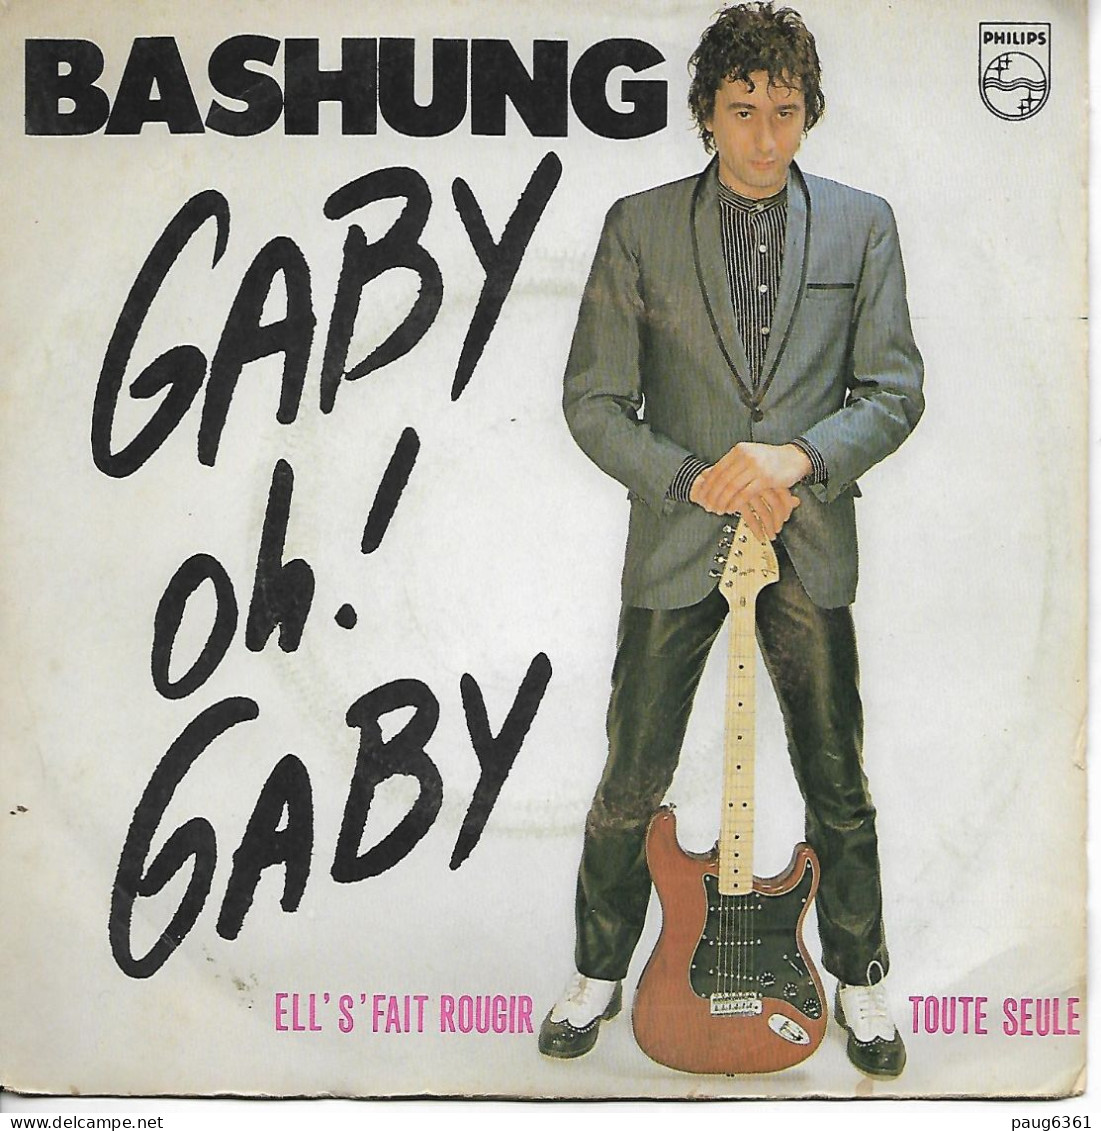 Bashung Gaby Oh! Gaby - Ell's'fait Rougir Toute Seule - Philips - 6172 310 PG 100 - Phonogram  BON ETAT VG - Andere - Franstalig